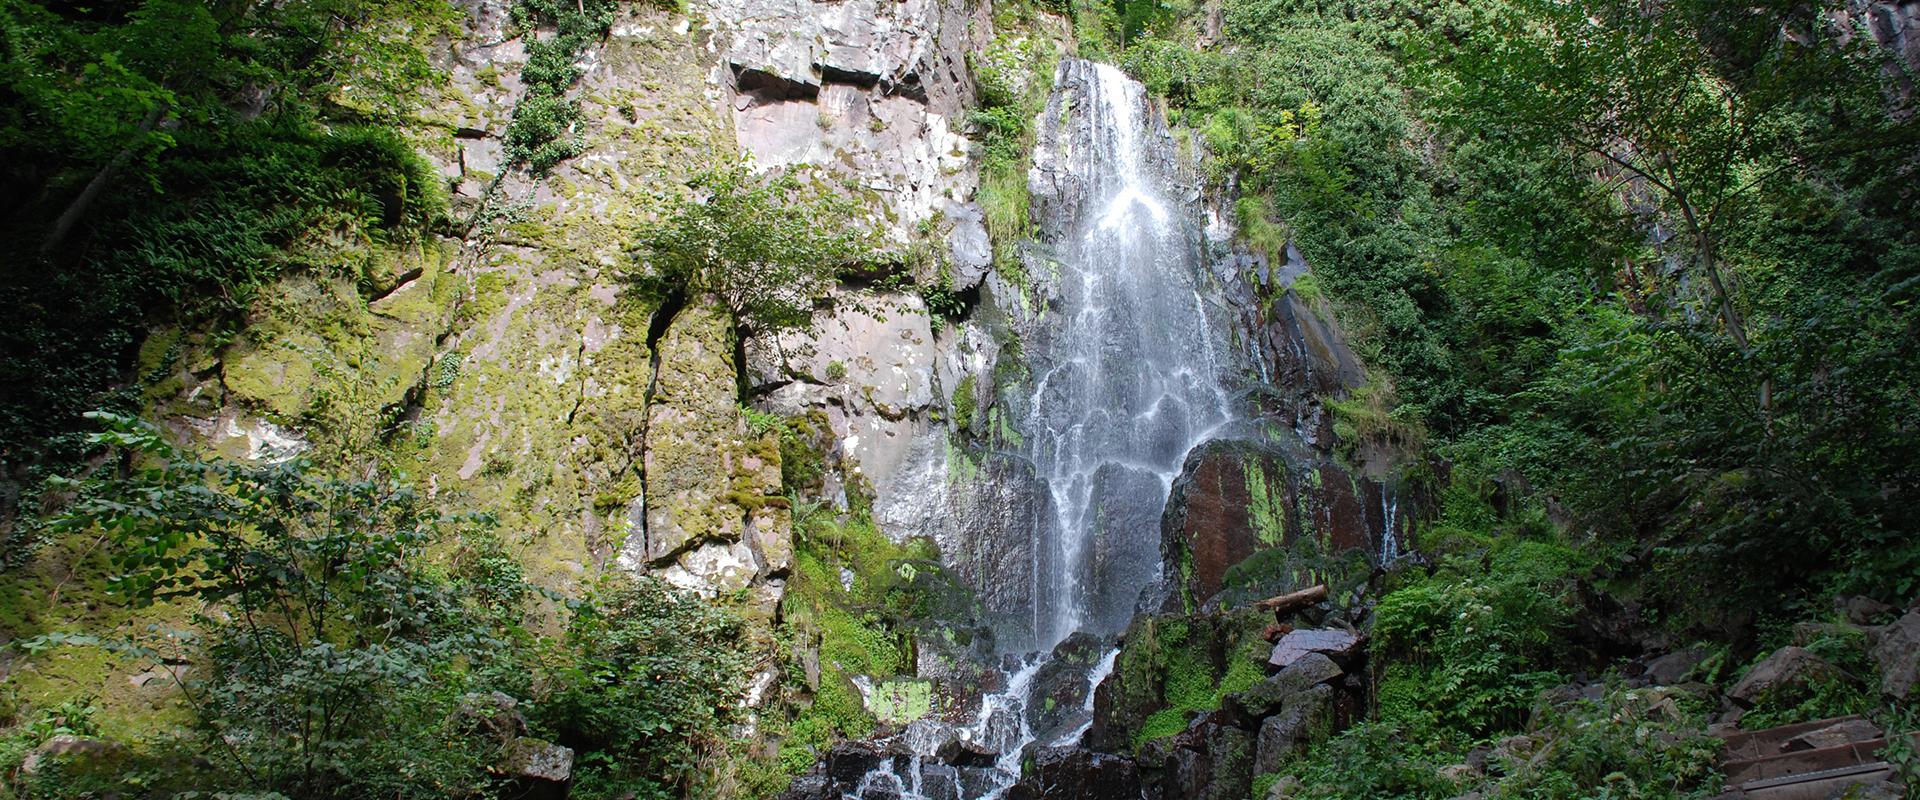 The Nideck waterfall, Bas-Rhin